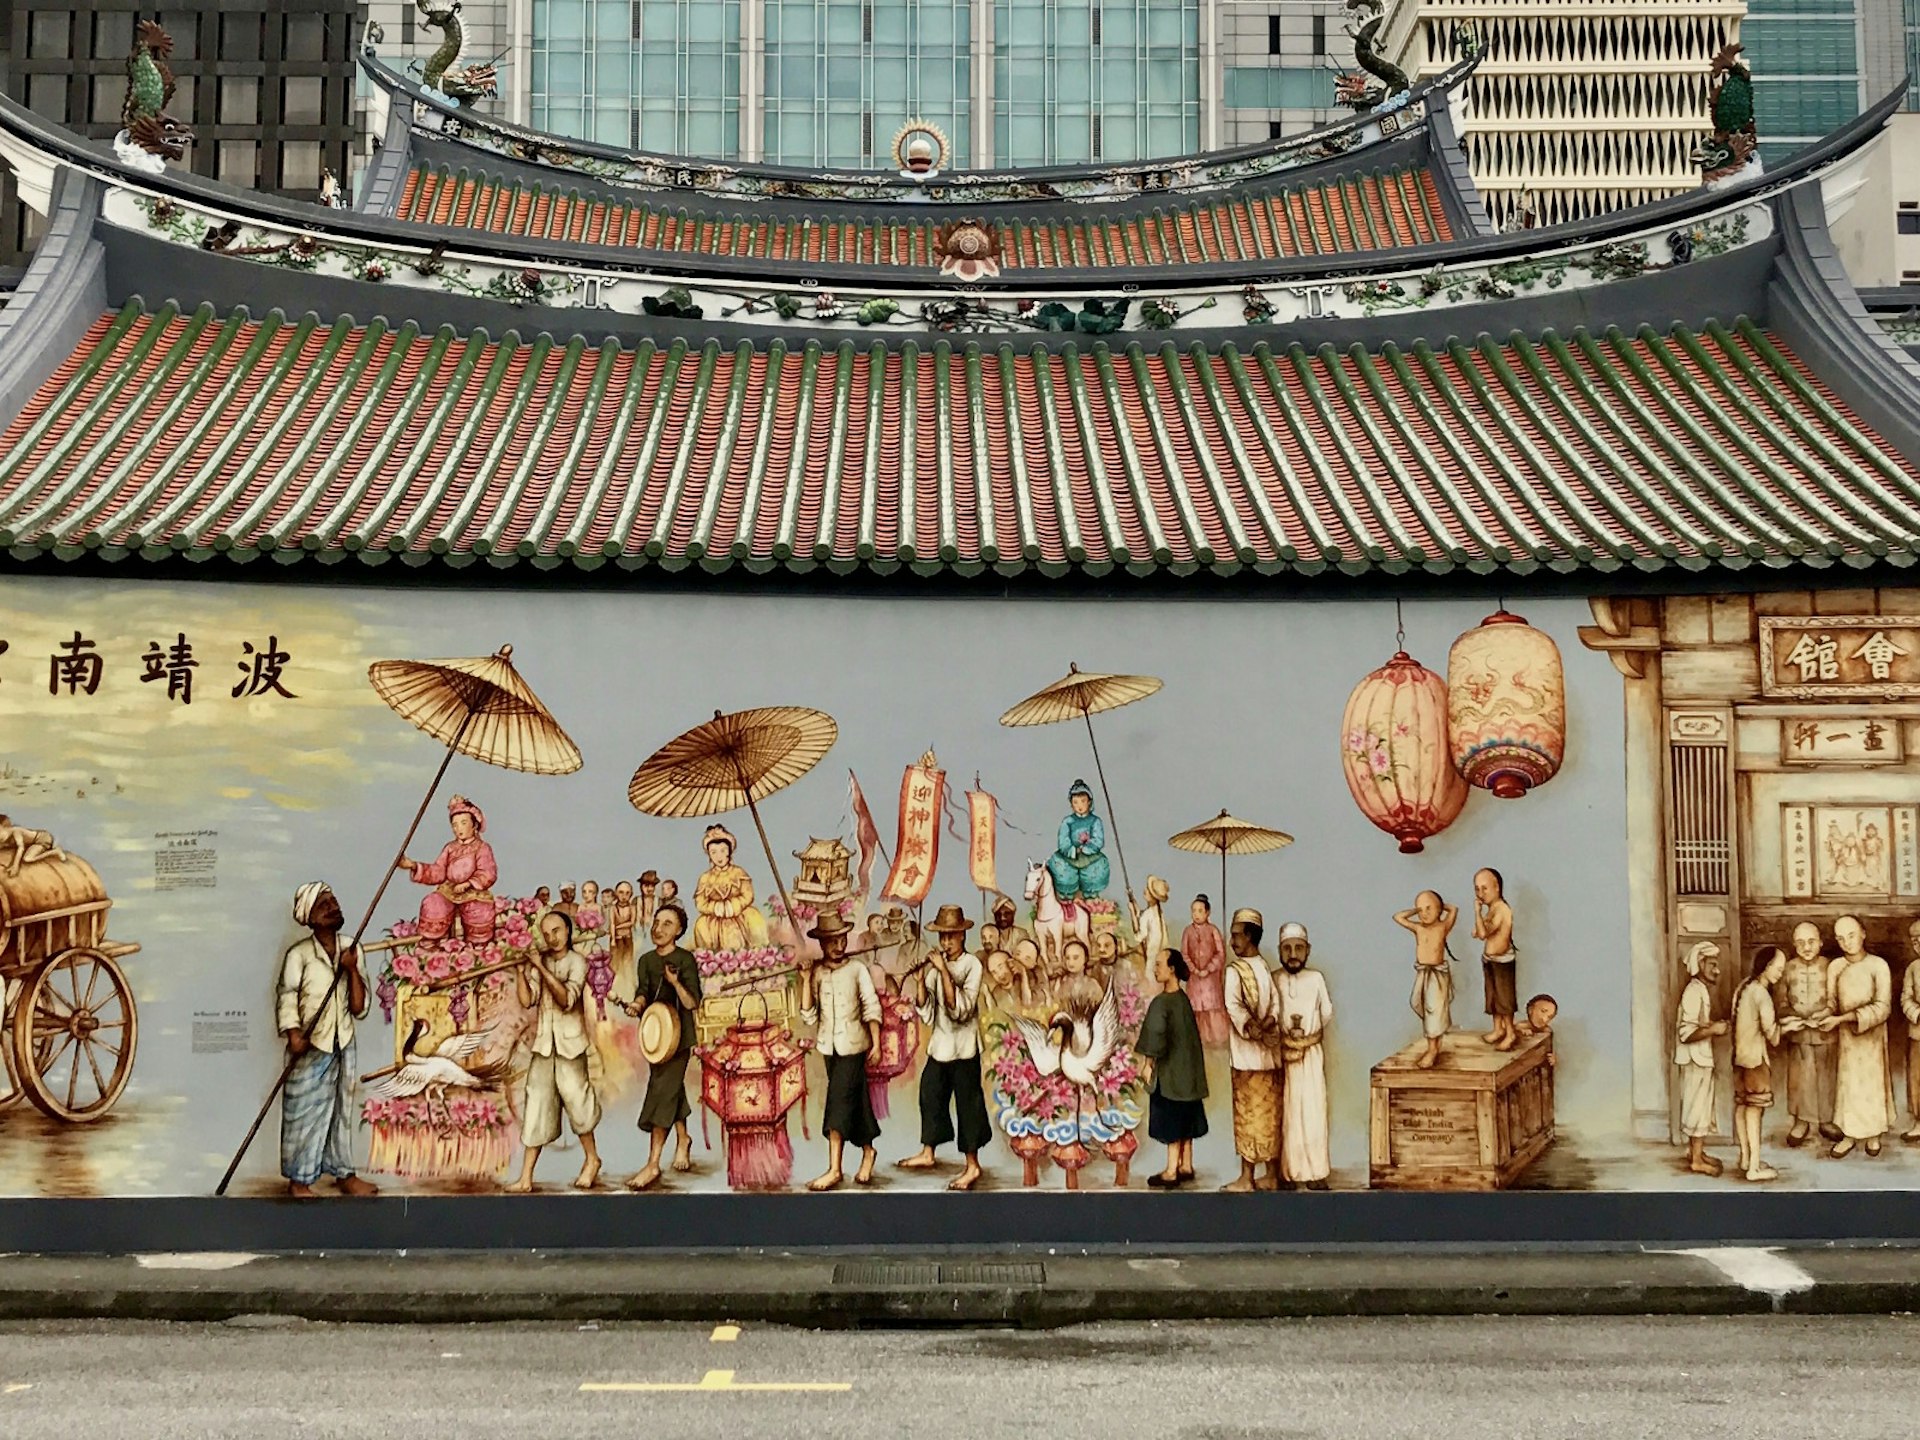 Thian Hock Keng Mural. Singapore